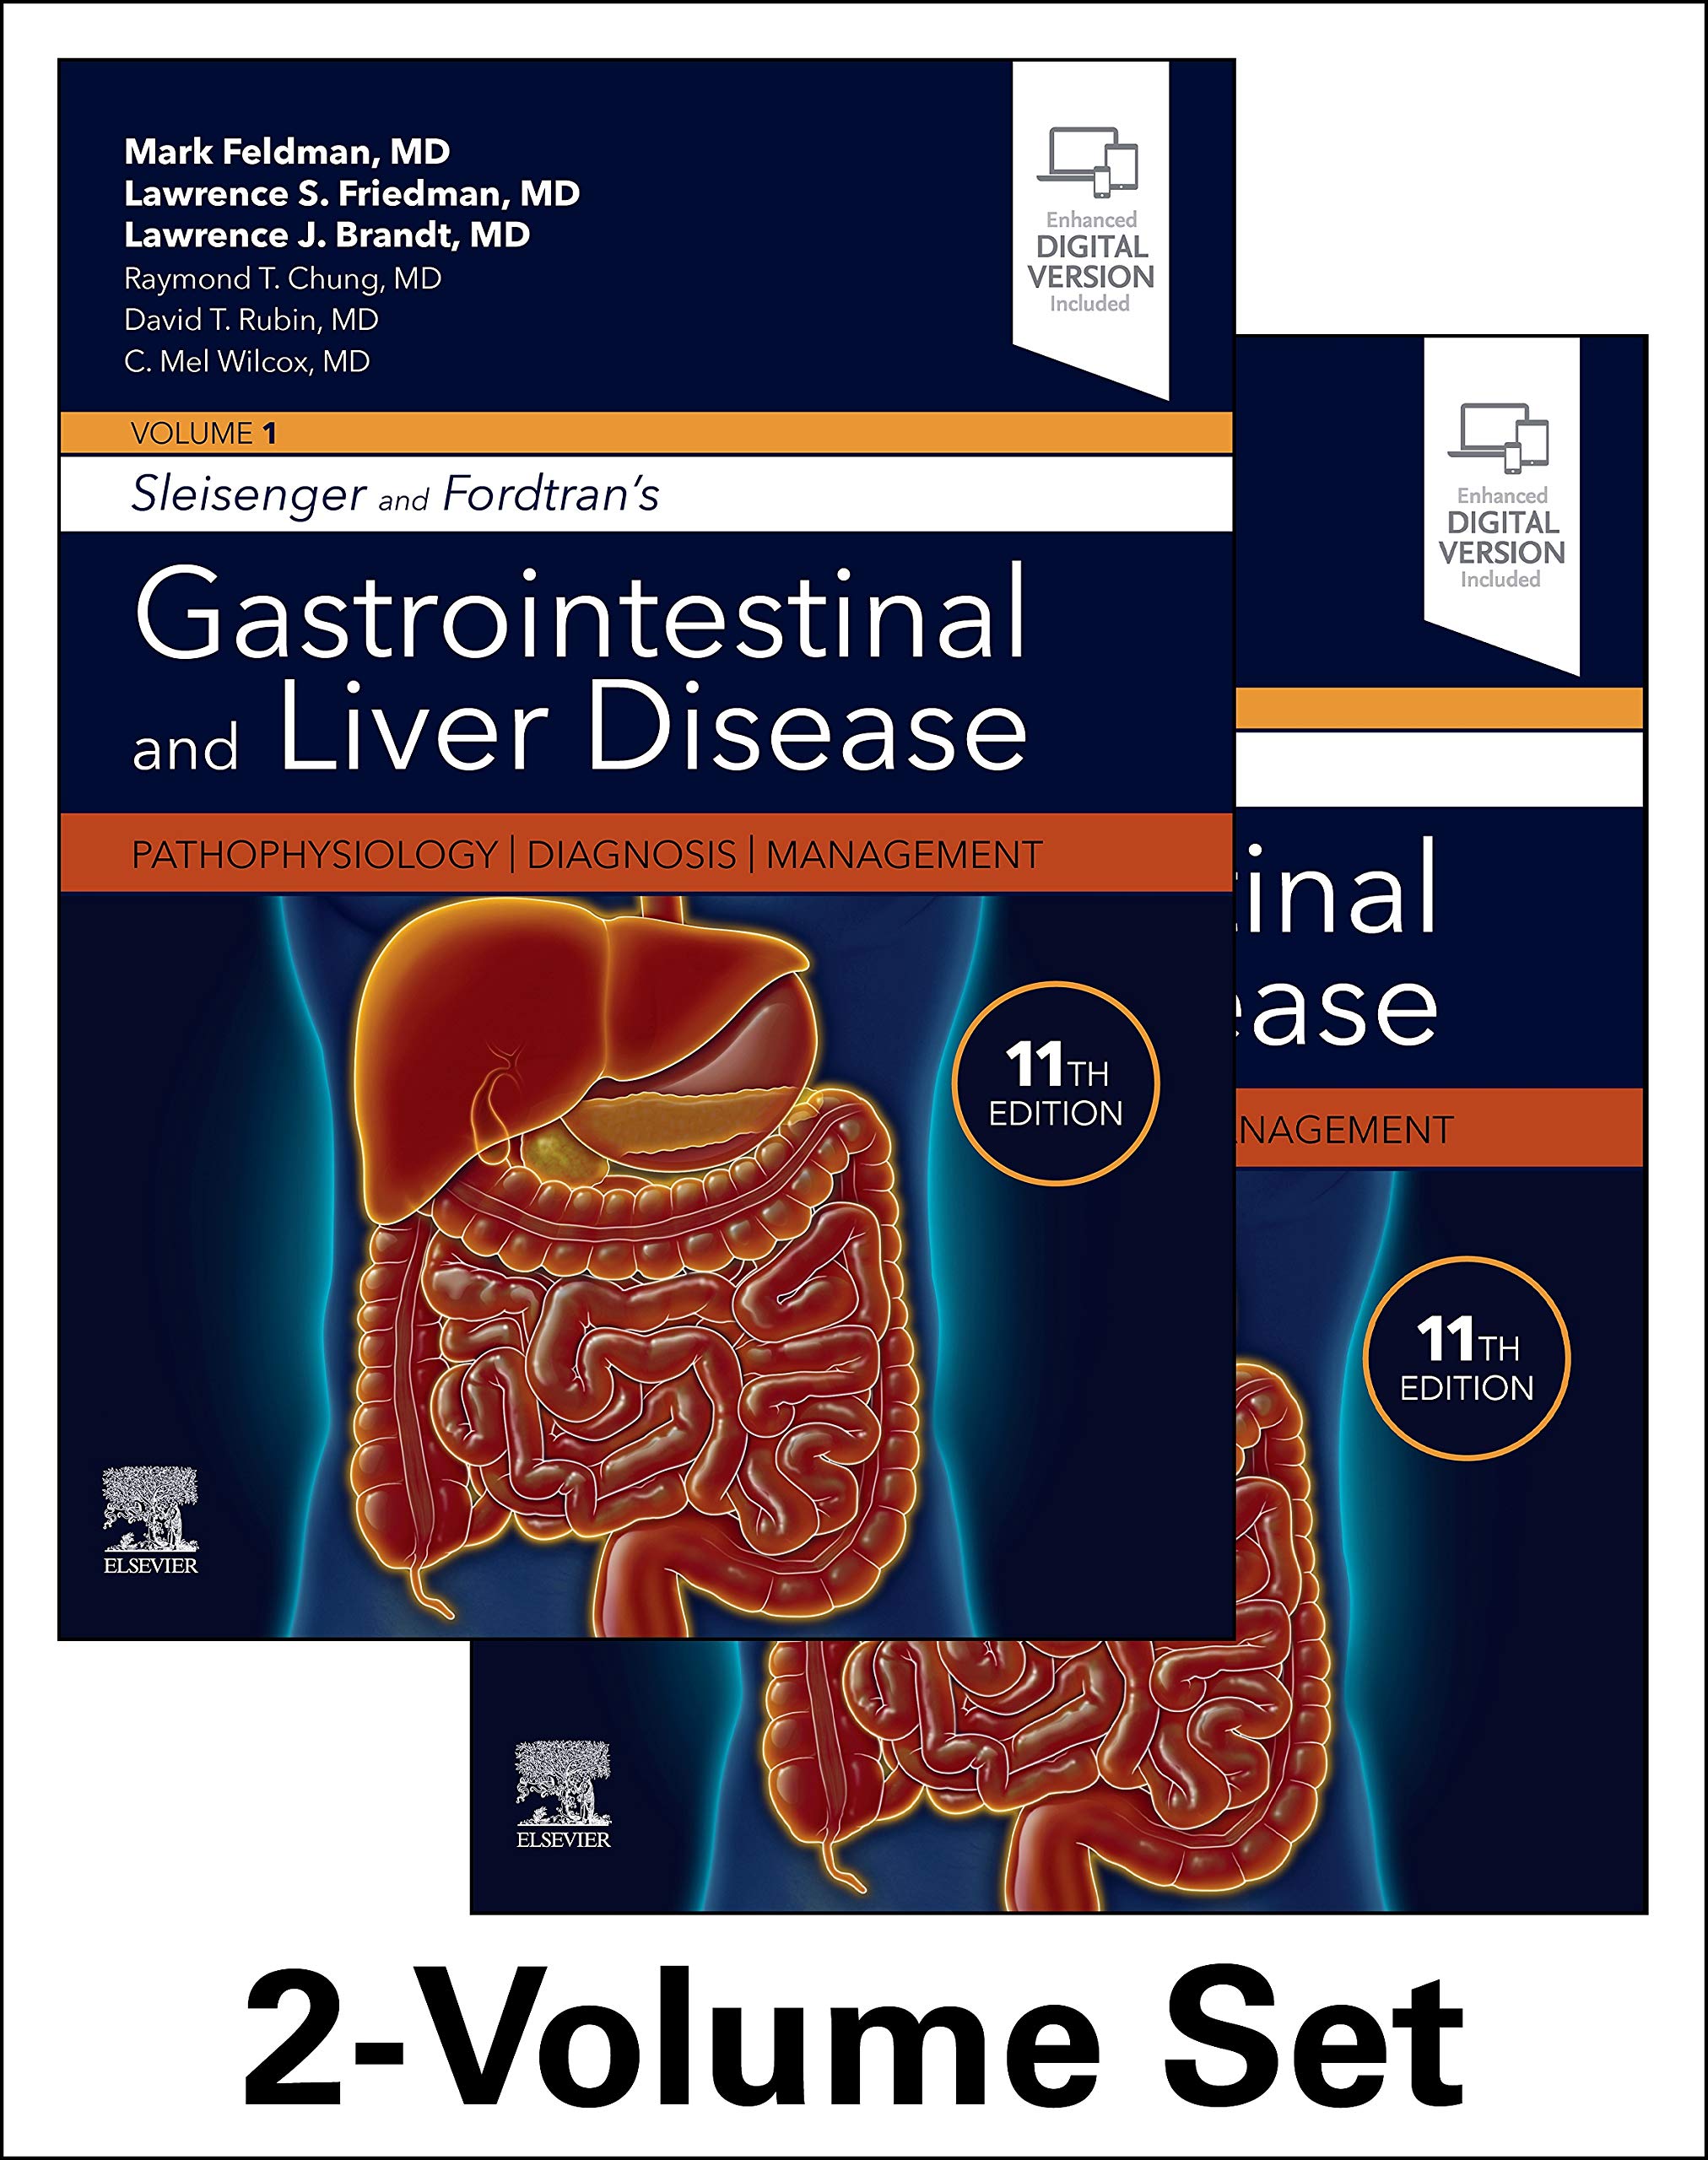 Sleisenger and Fordtran's Gastrointestinal and Liver Disease- 2 Volume Set: Pathophysiology, Diagnosis, Management 11th Edition